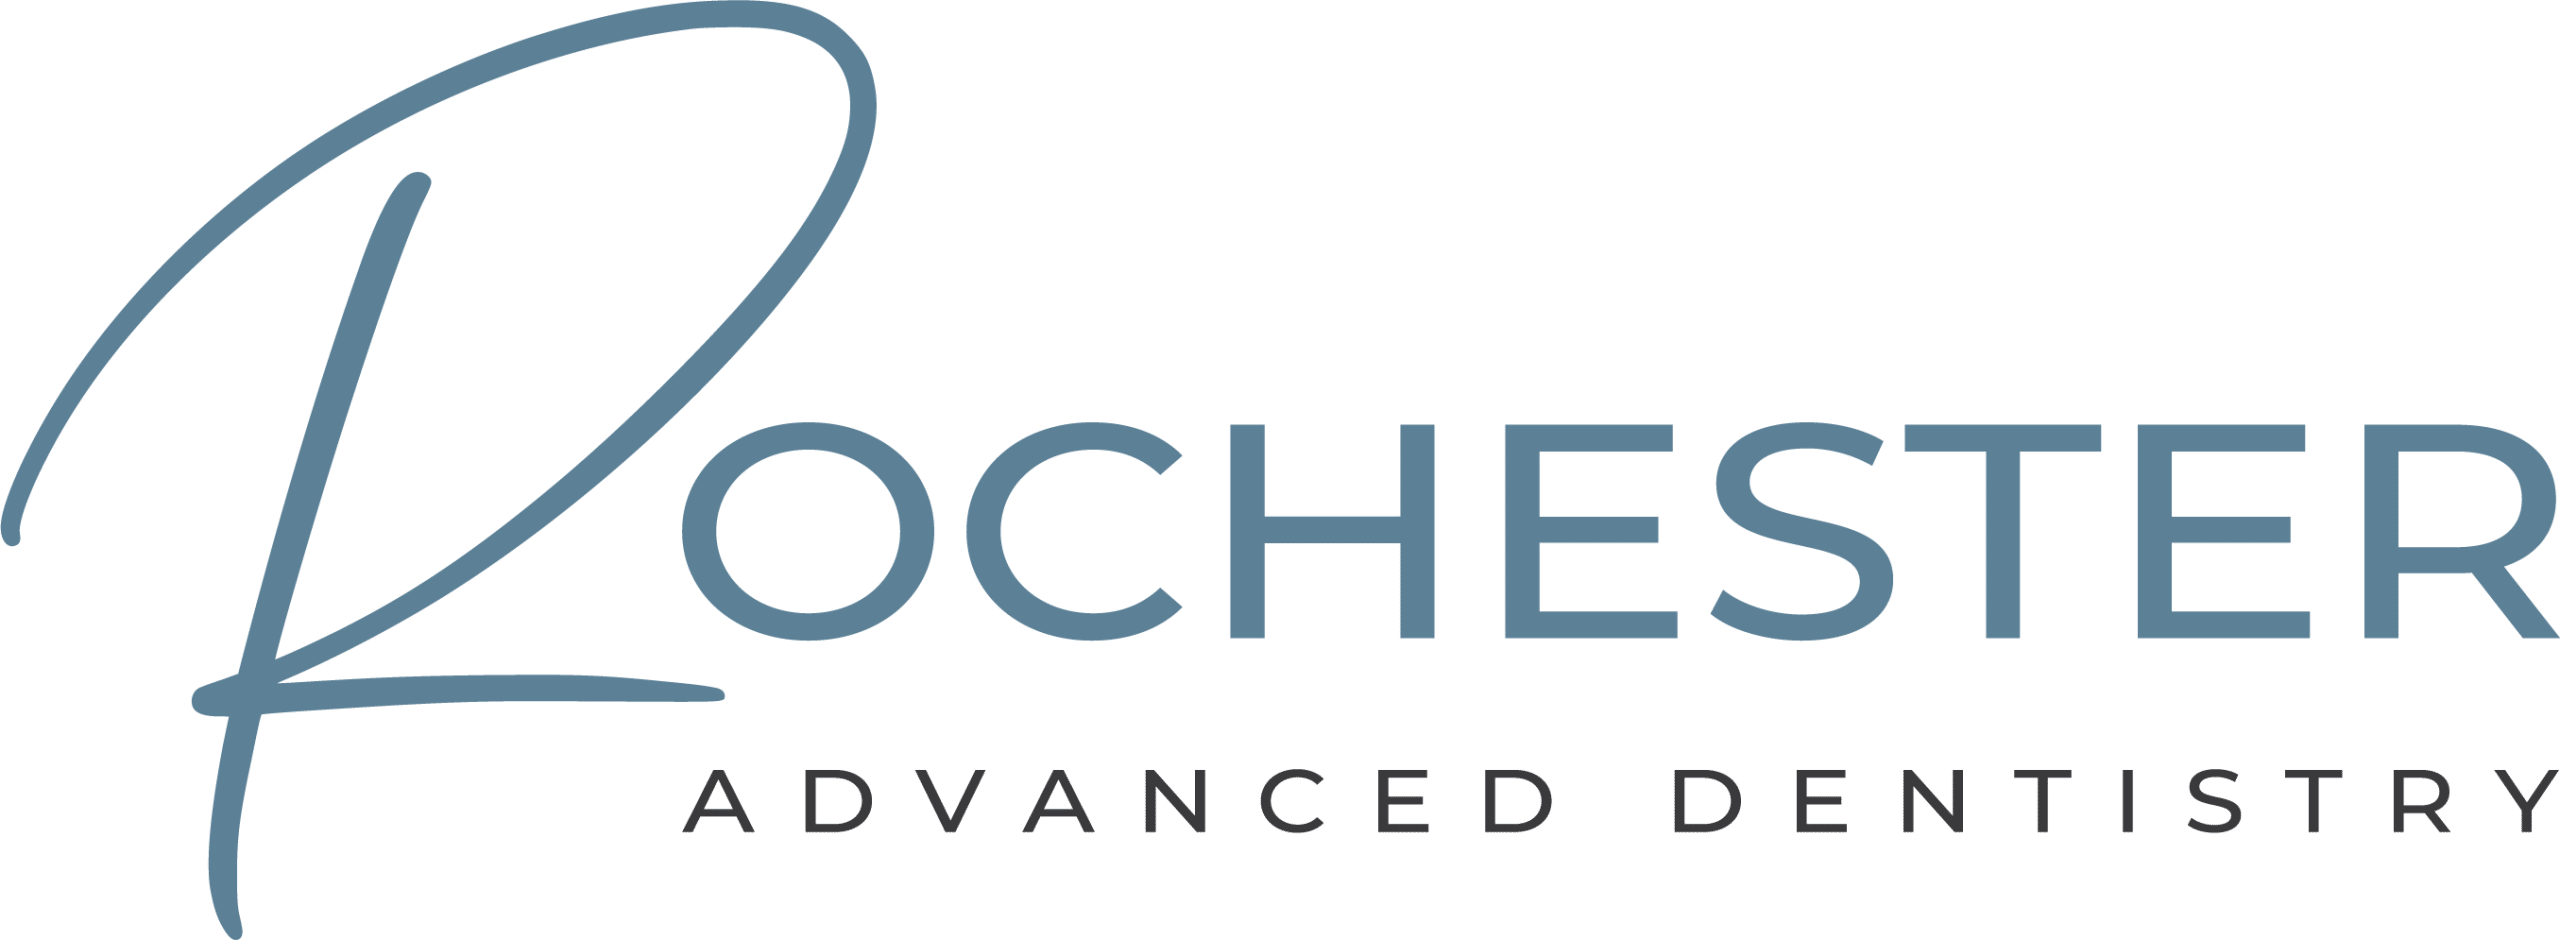 Rochester Advanced Dentistry logo